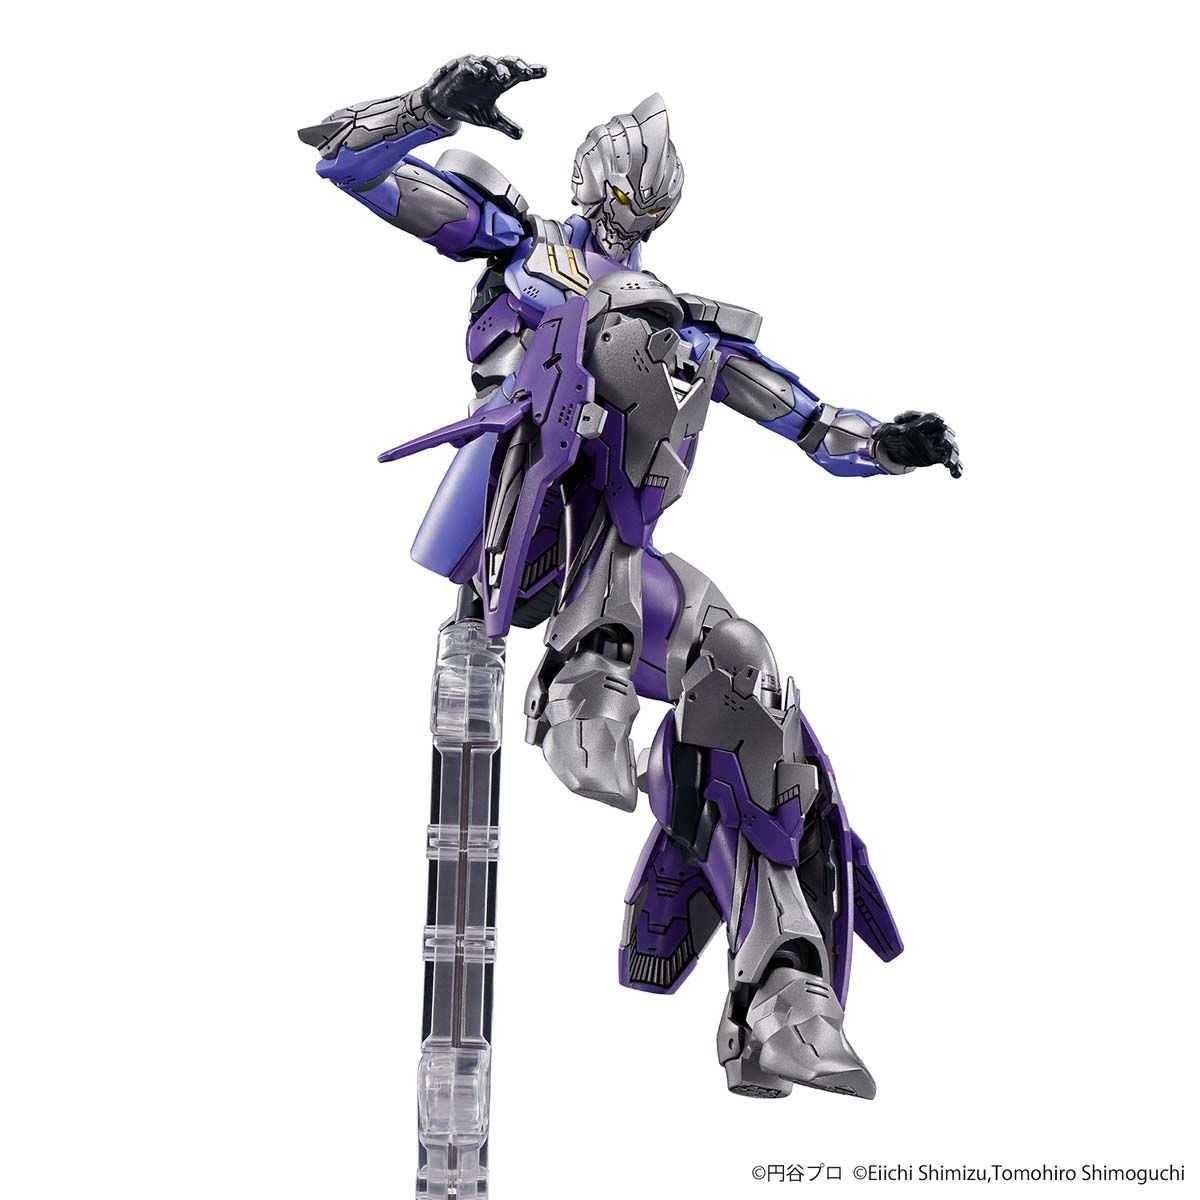 Ultraman Suit Tiga (Sky Type) -Action- Figure-rise Standard - Glacier Hobbies - Bandai